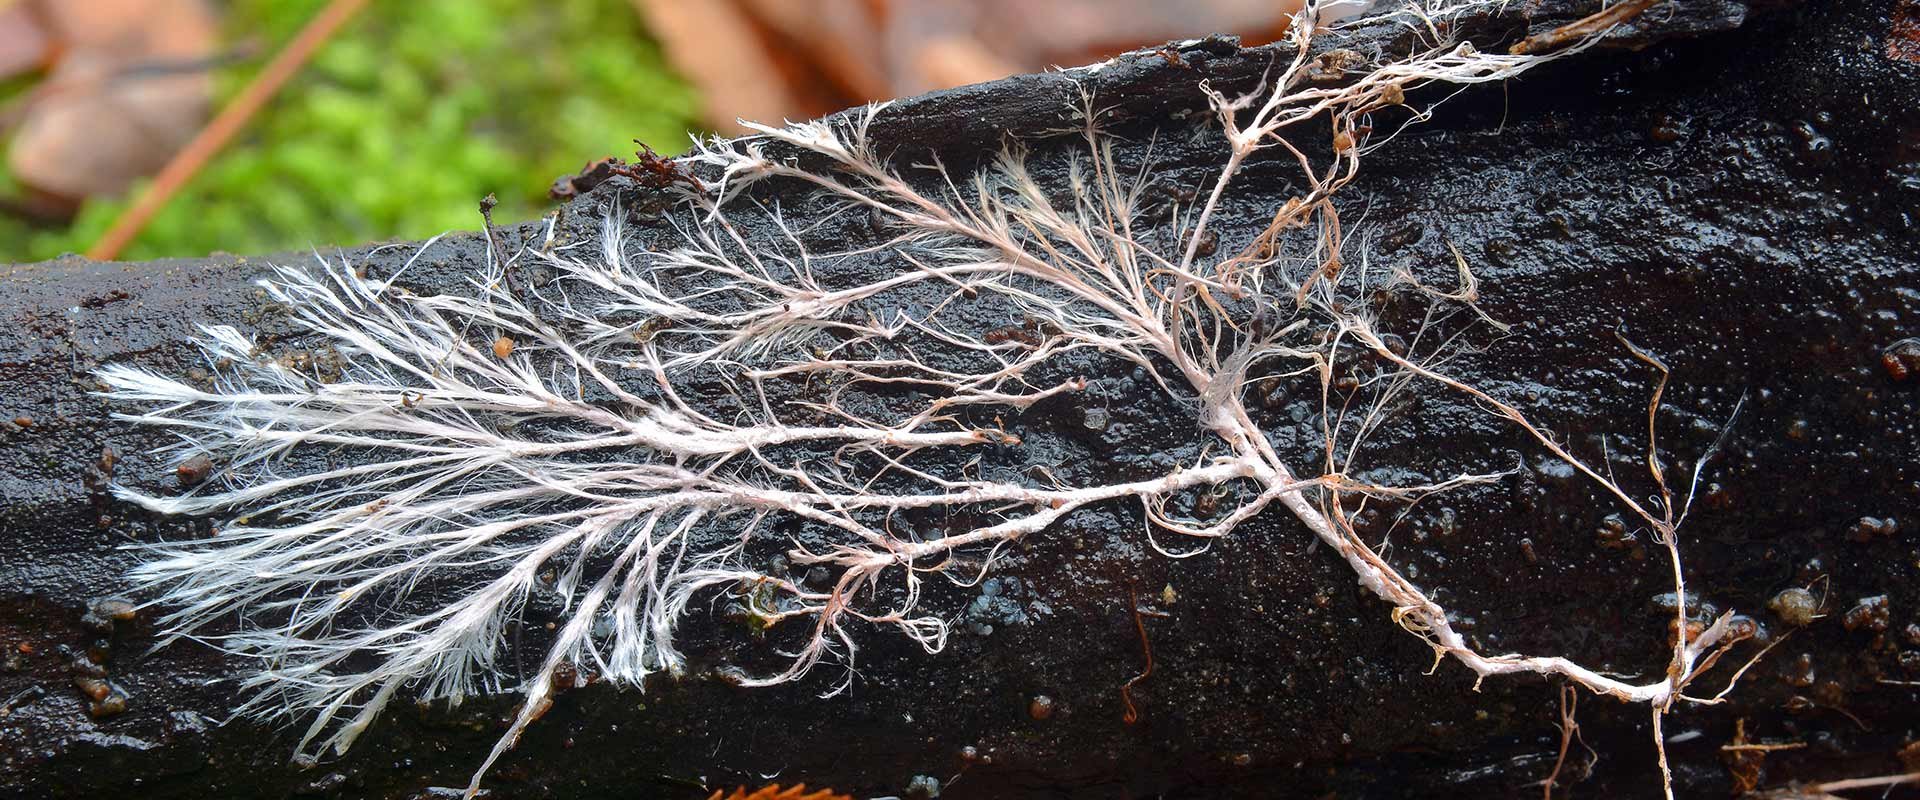 Mighty Mycelium - Fascinating, fruitful and underexplored fungus